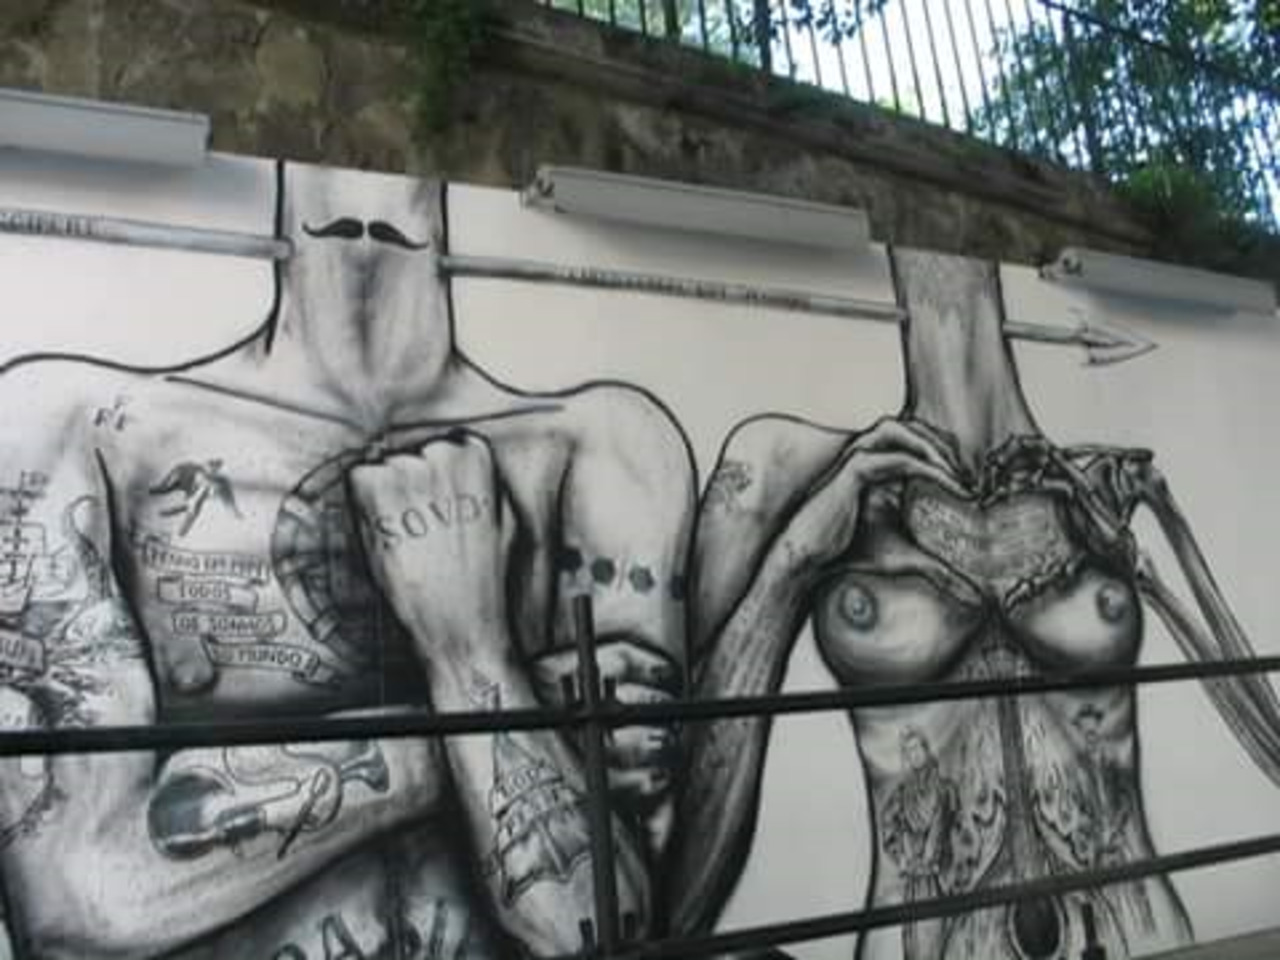 #streetart  #inspirational #love #art #city #graffiti #lisbon #wall #mural #artist http://t.co/1wpXNilydS